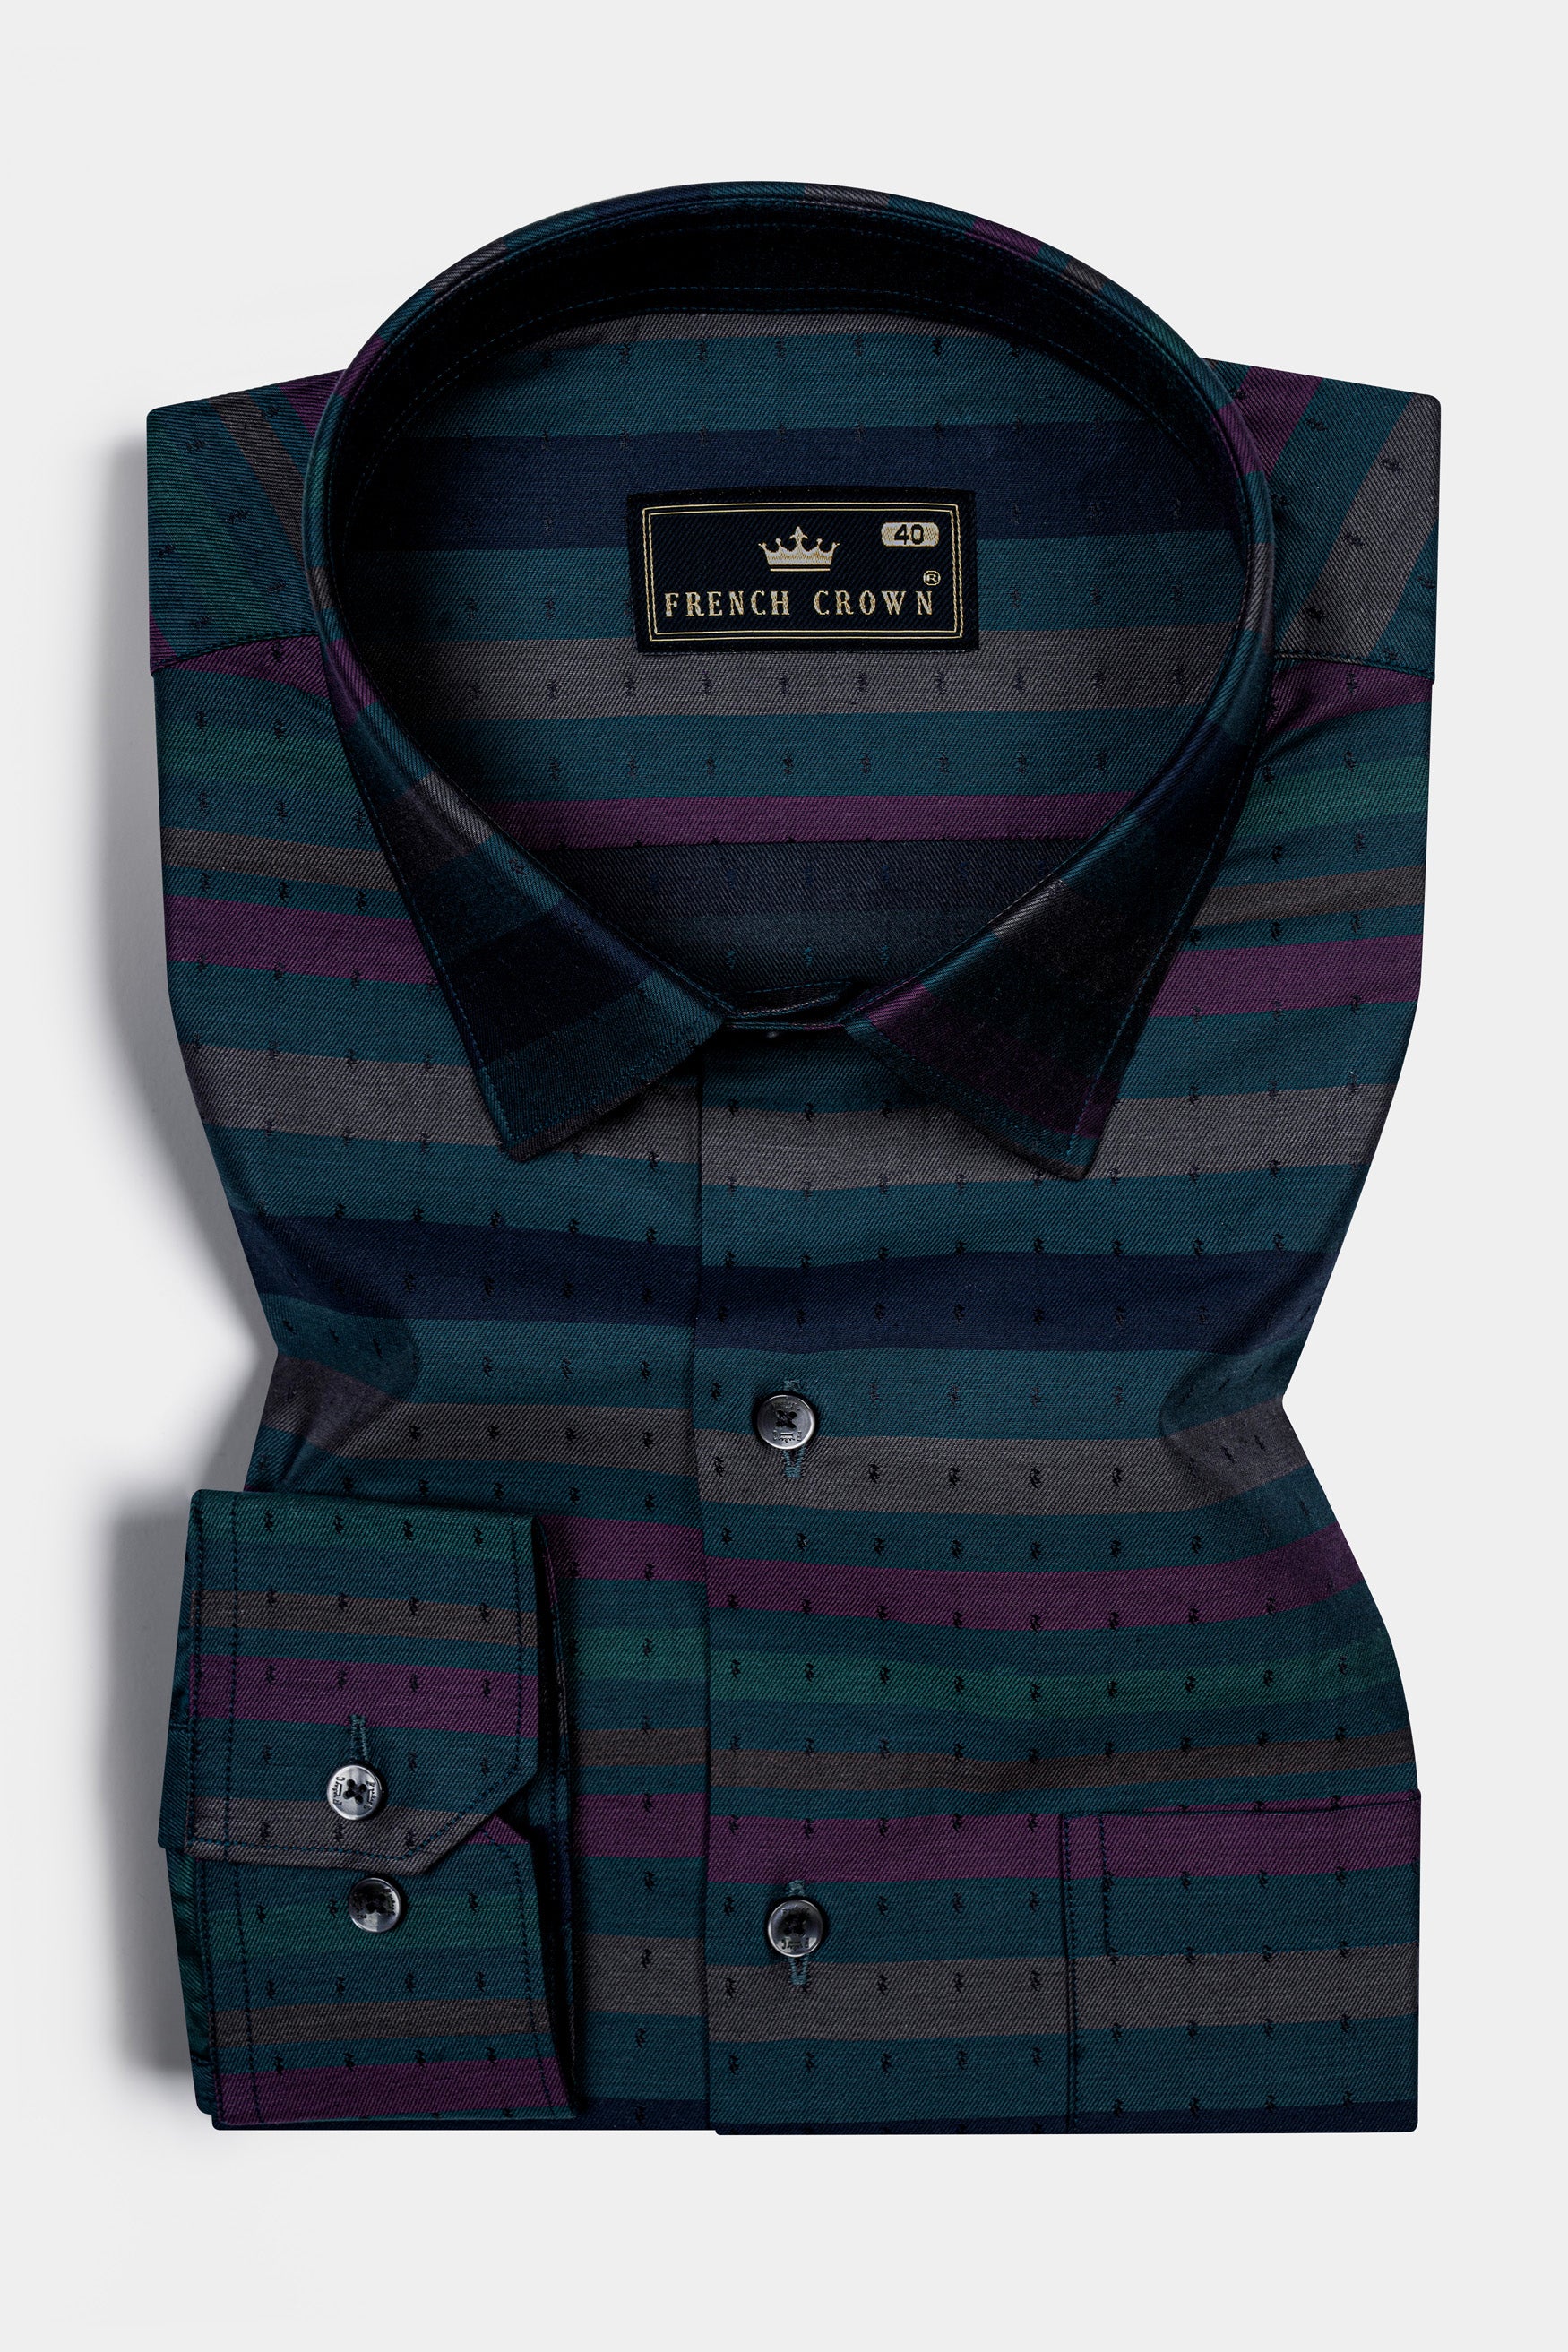 Blumine blue and Byzantium Purple Jacquard Textured Premium Giza Cotton Shirt